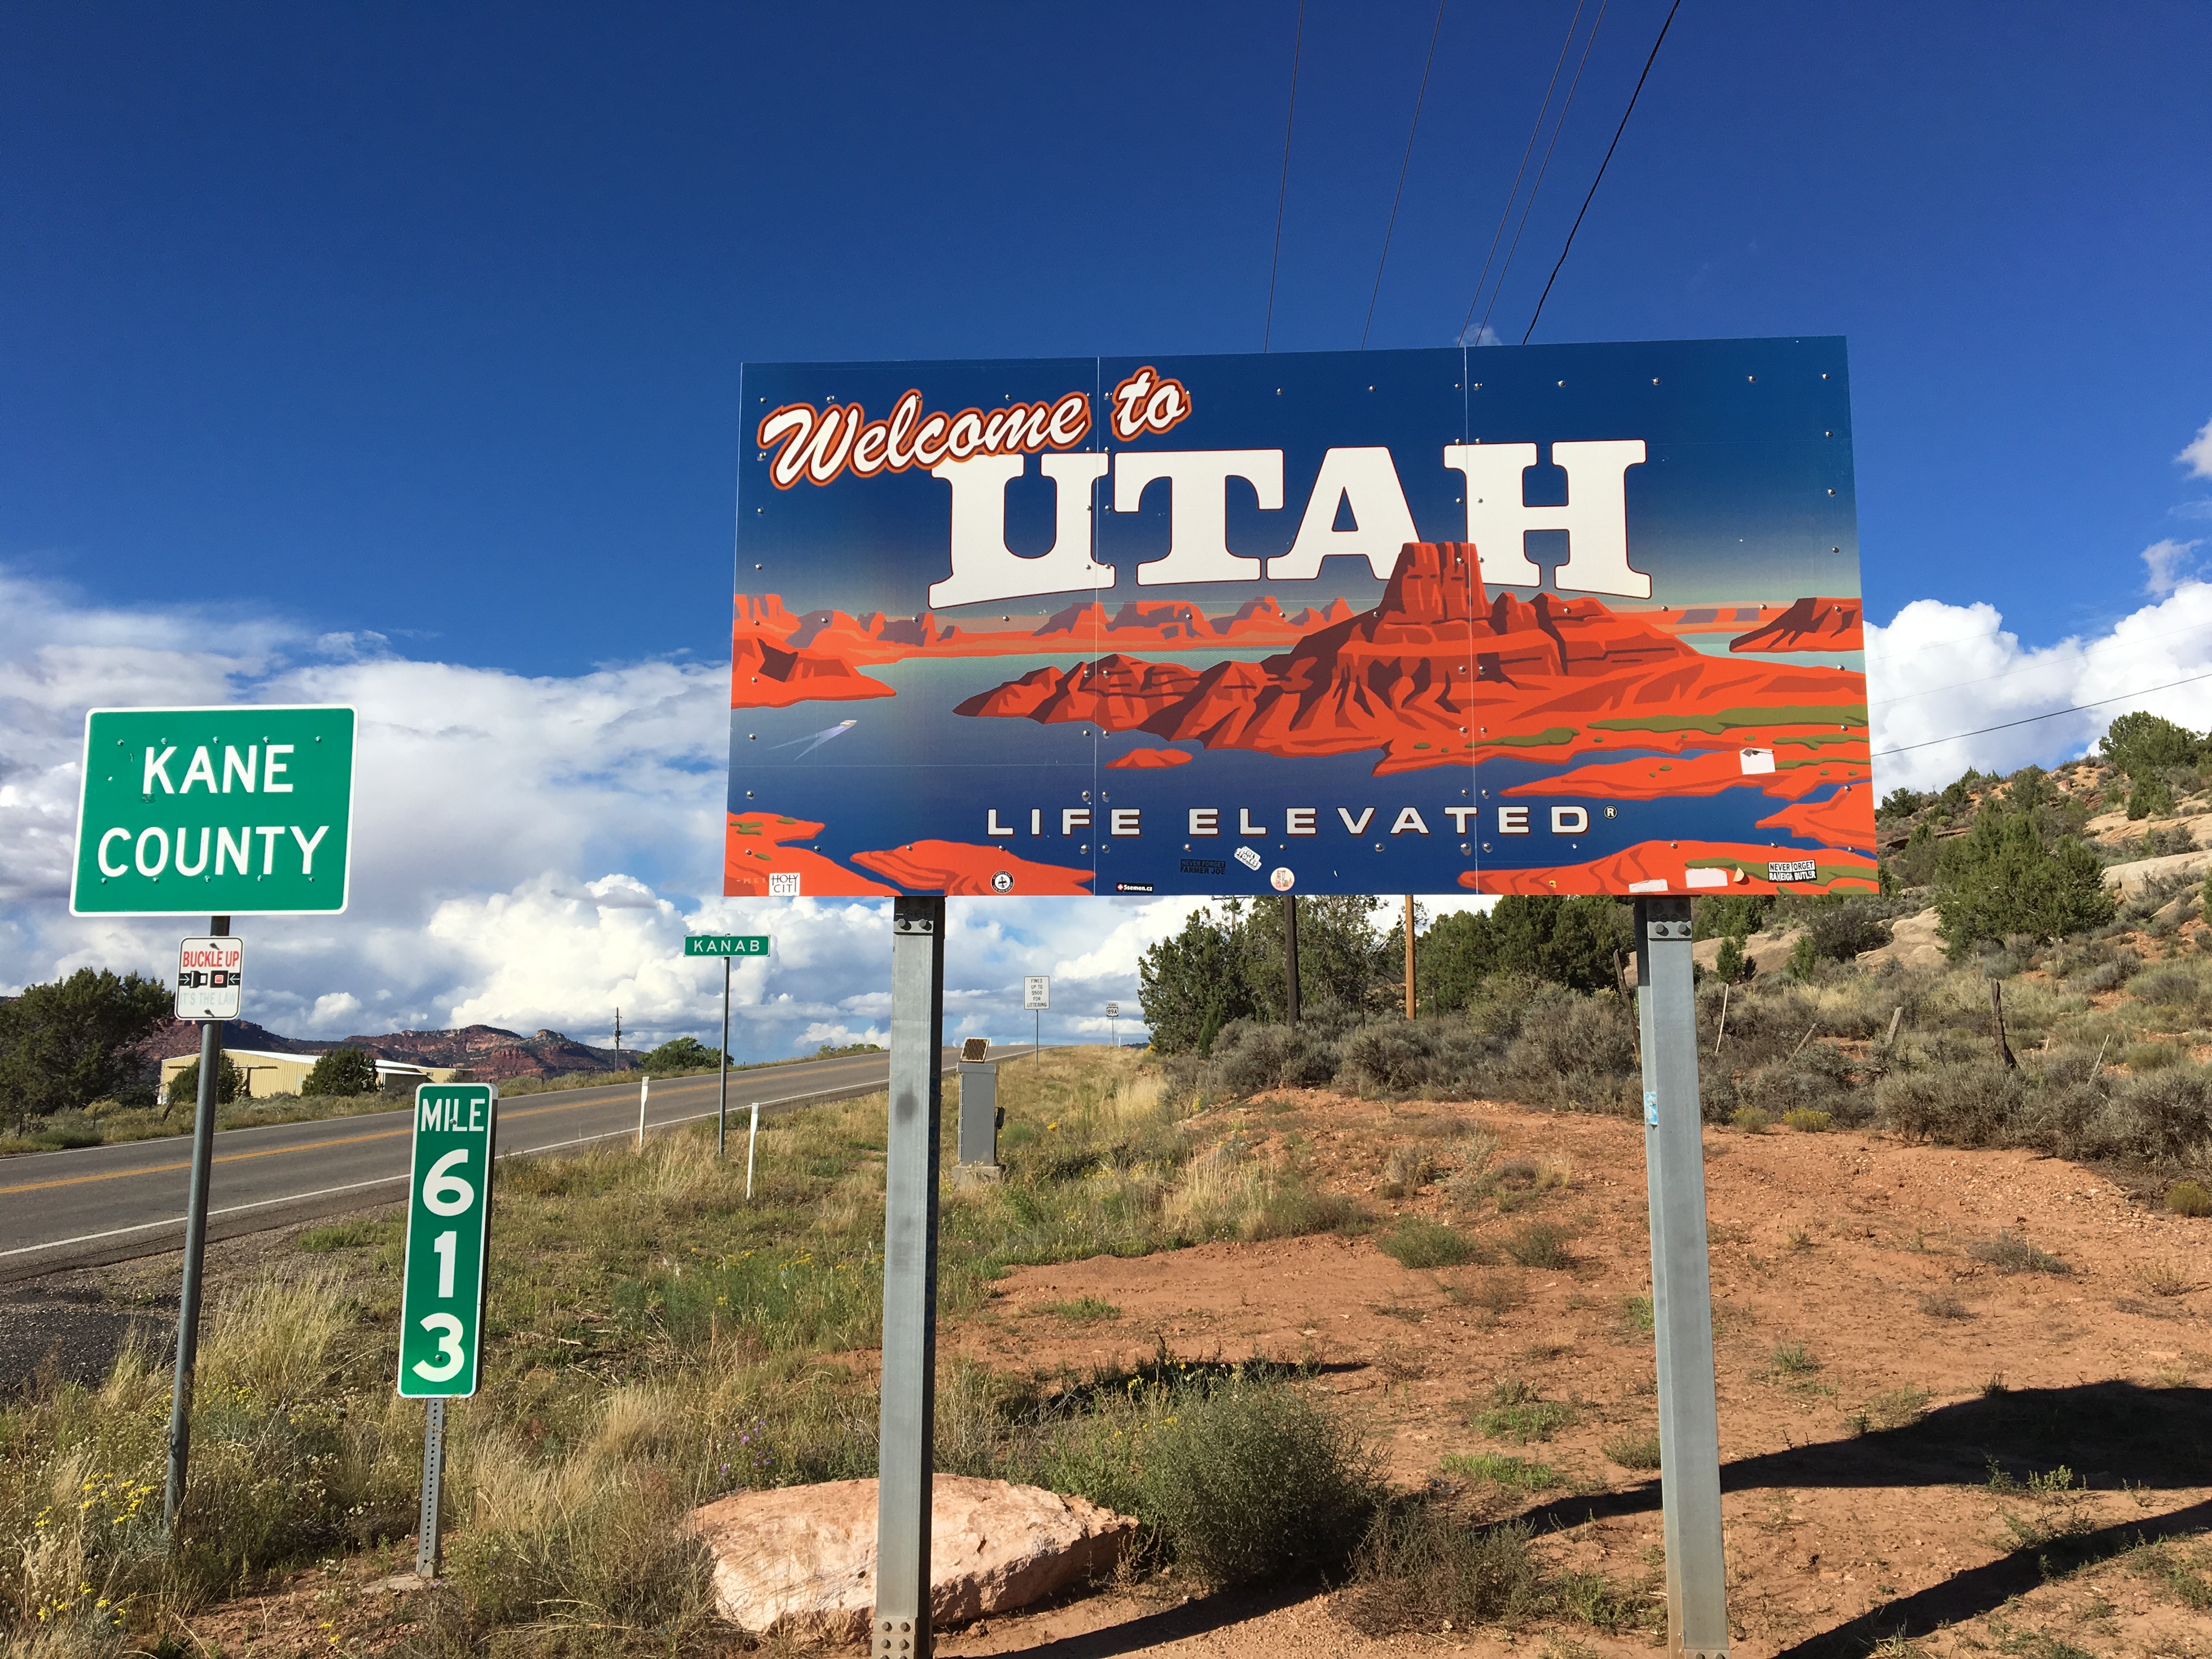 Entering Utah from Arizona via 89A